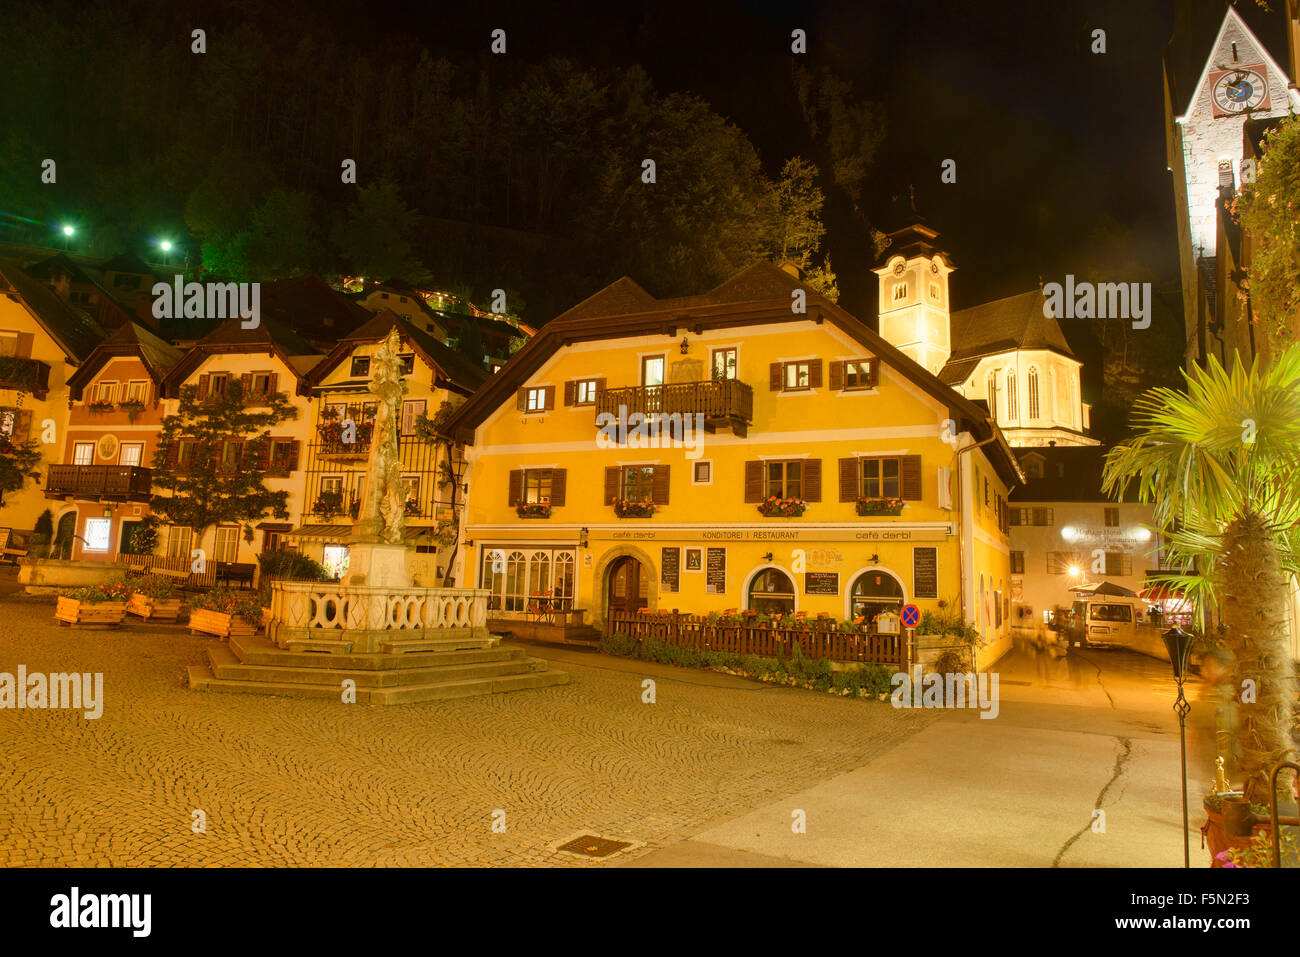 Marktplatz village square at night in Hallstatt, Salzkammergut, Austria Stock Photo